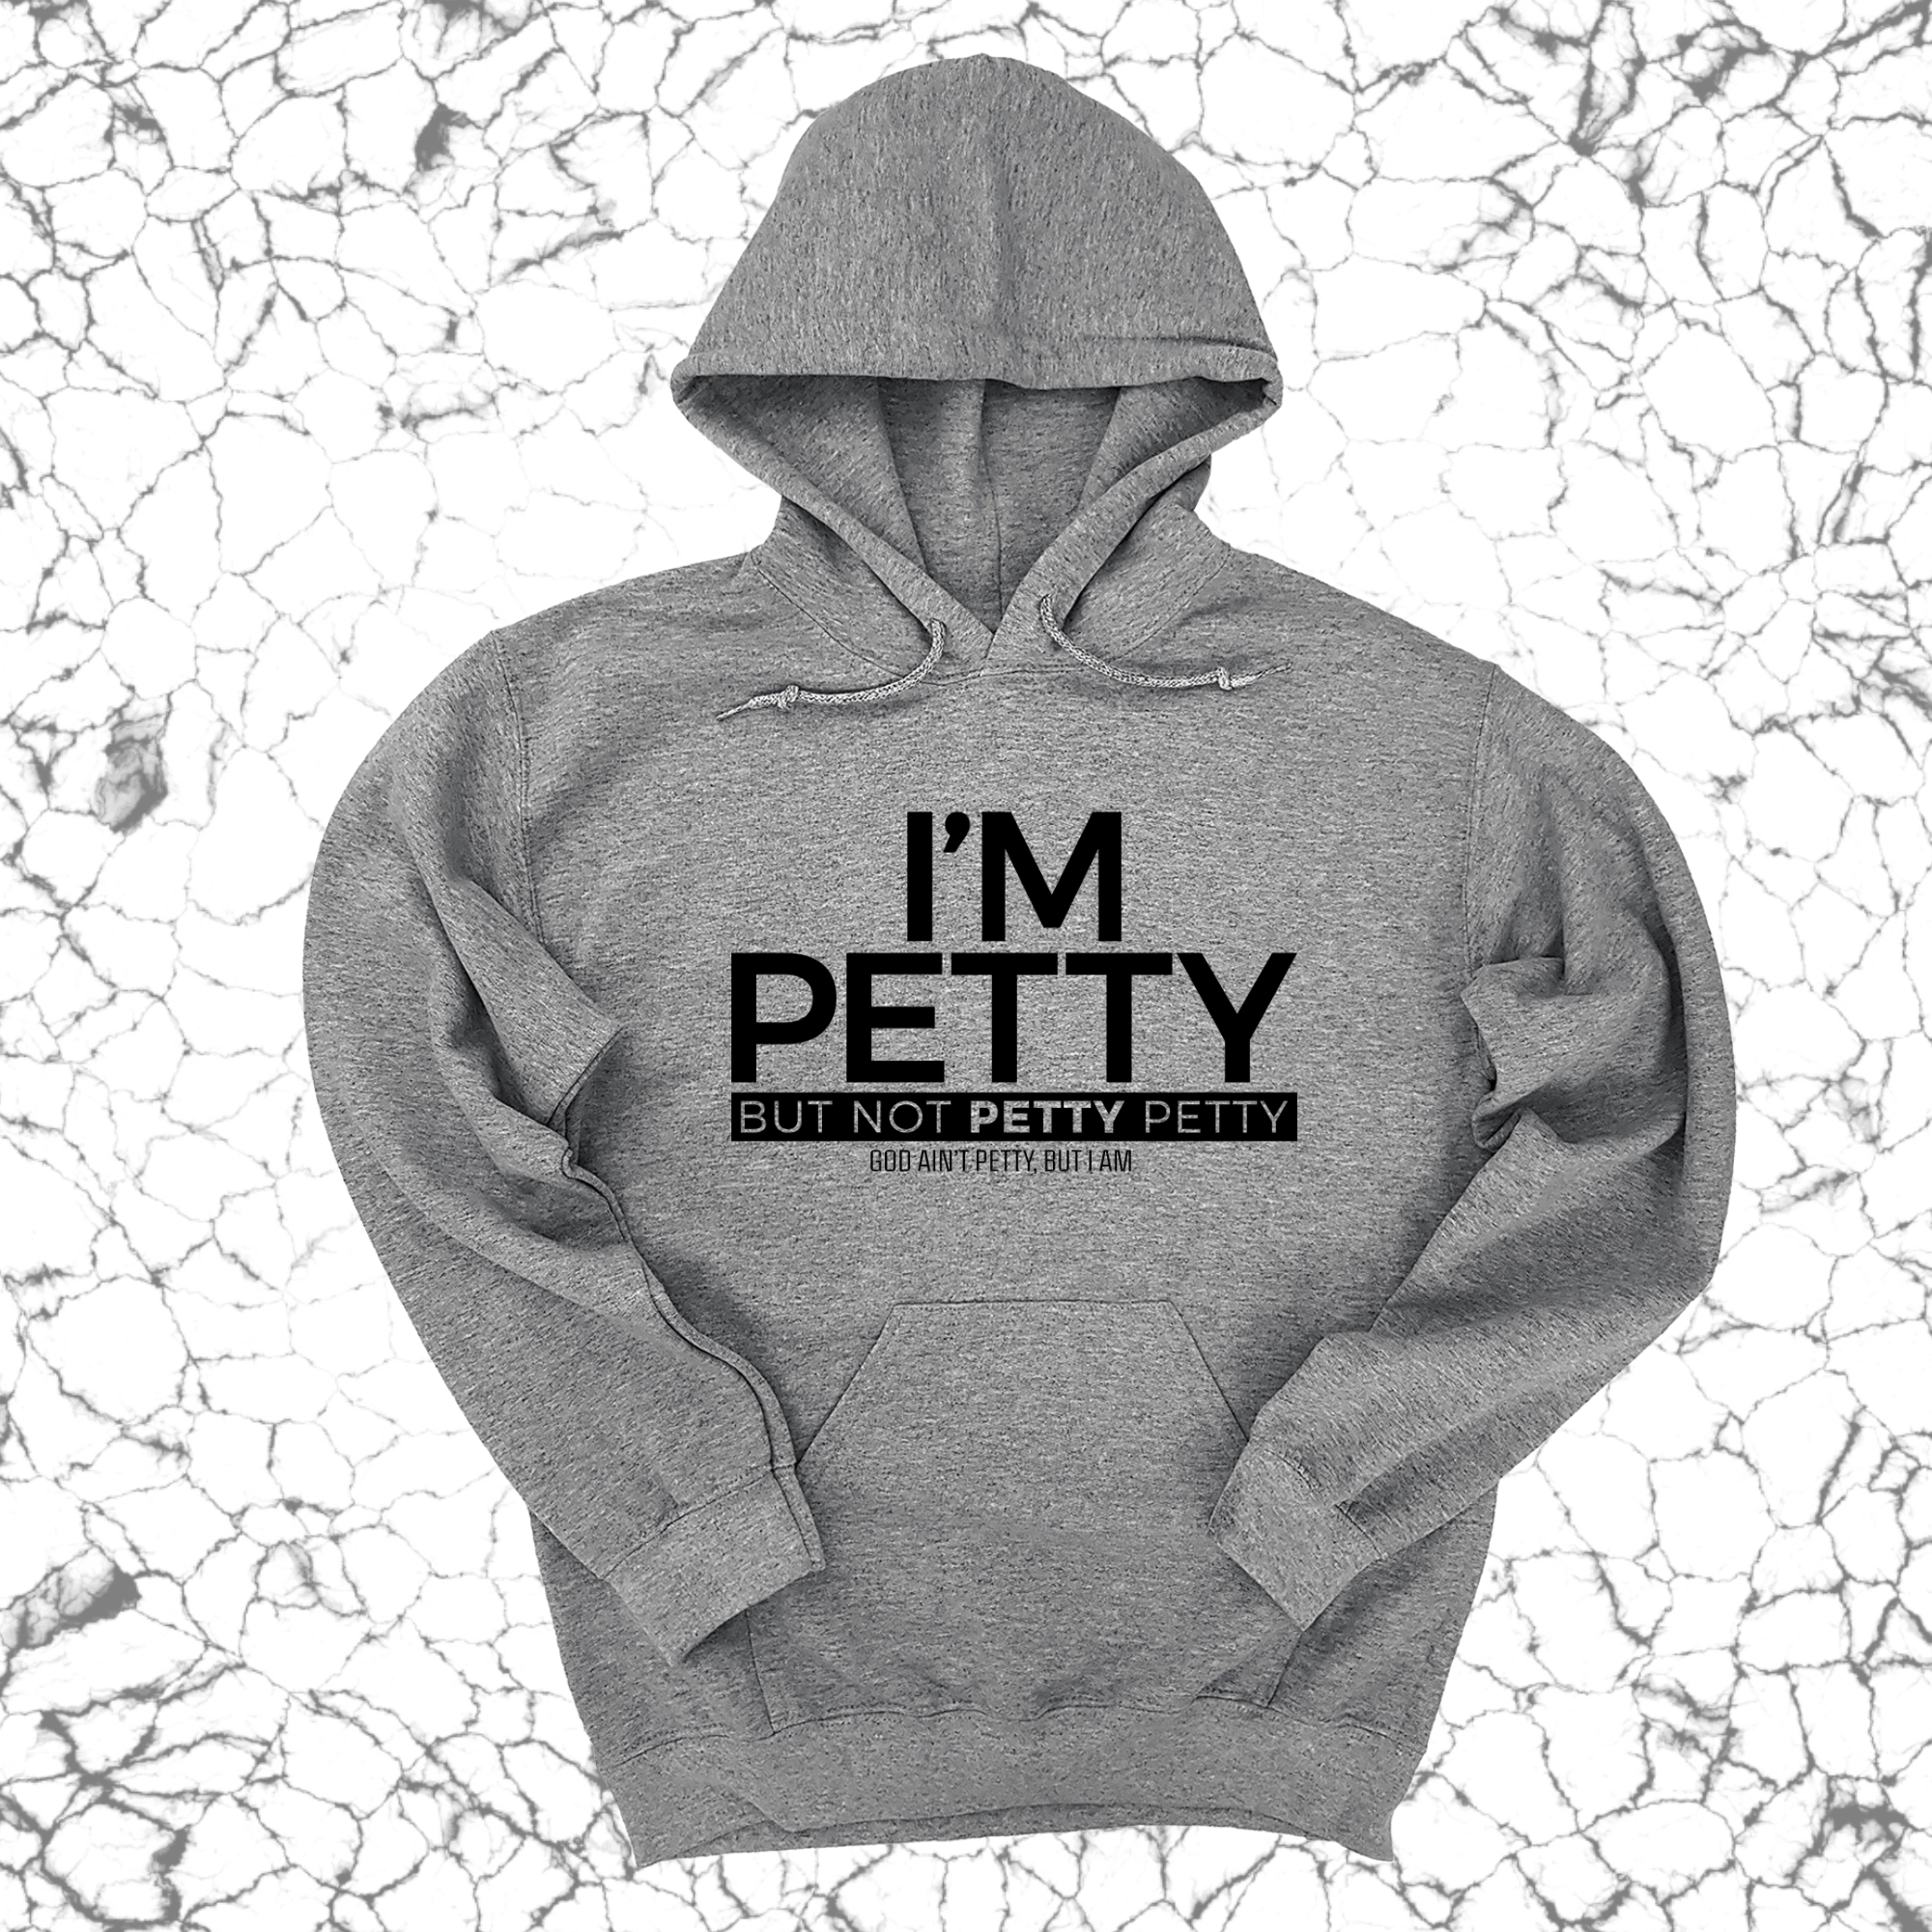 I'm Petty but not petty petty Unisex Hoodie-Hoodie-The Original God Ain't Petty But I Am